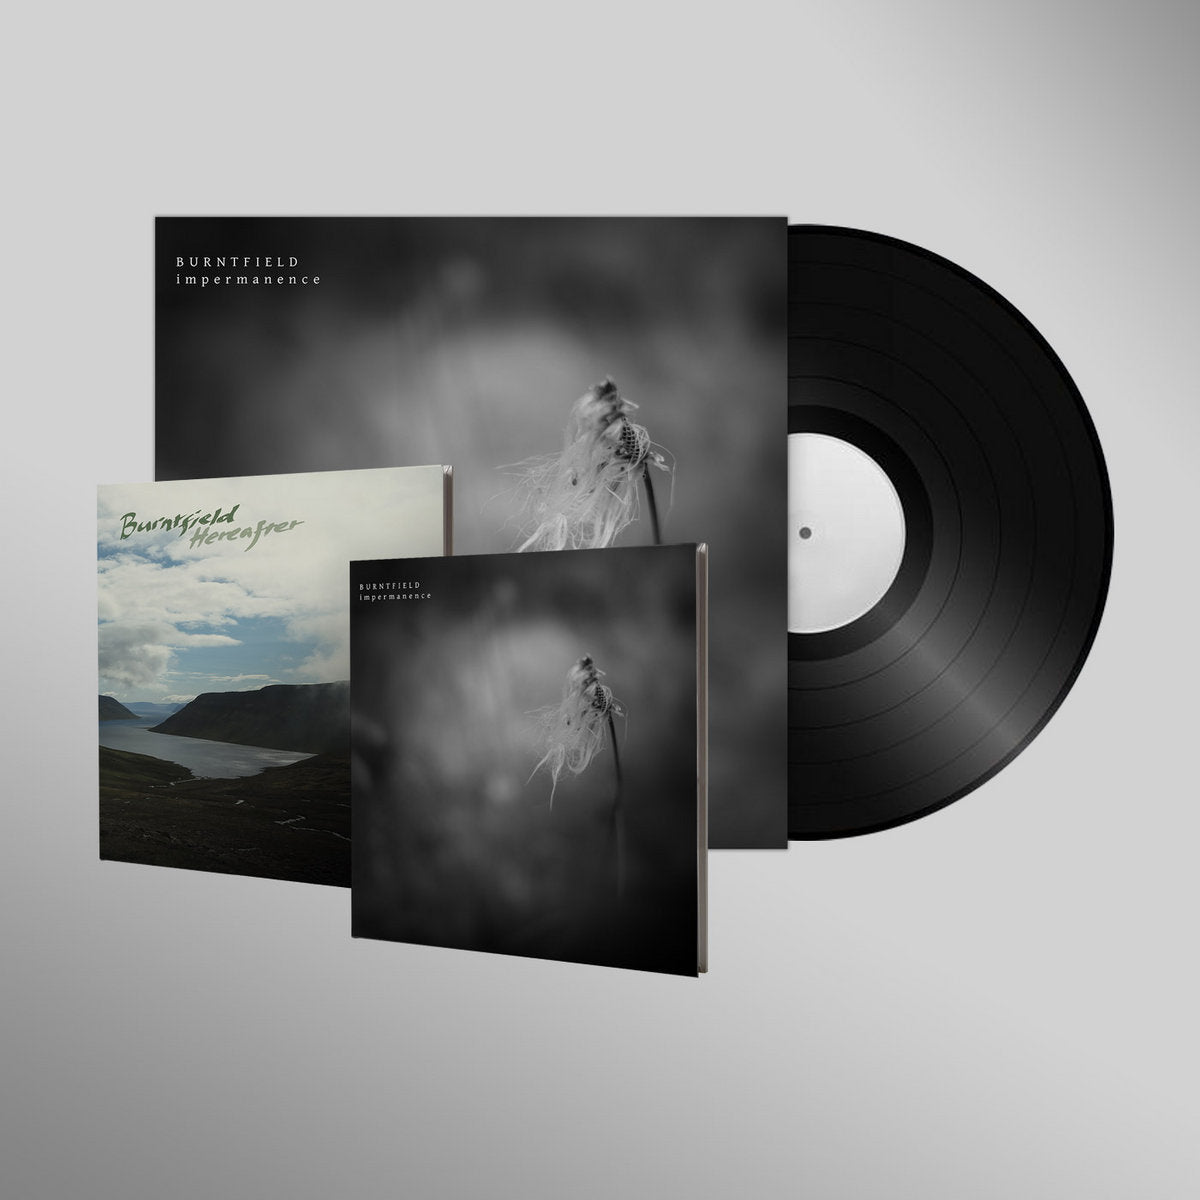 Burntfield - Impermanence (12" vinyl & CD + Hereafter CD Bundle)